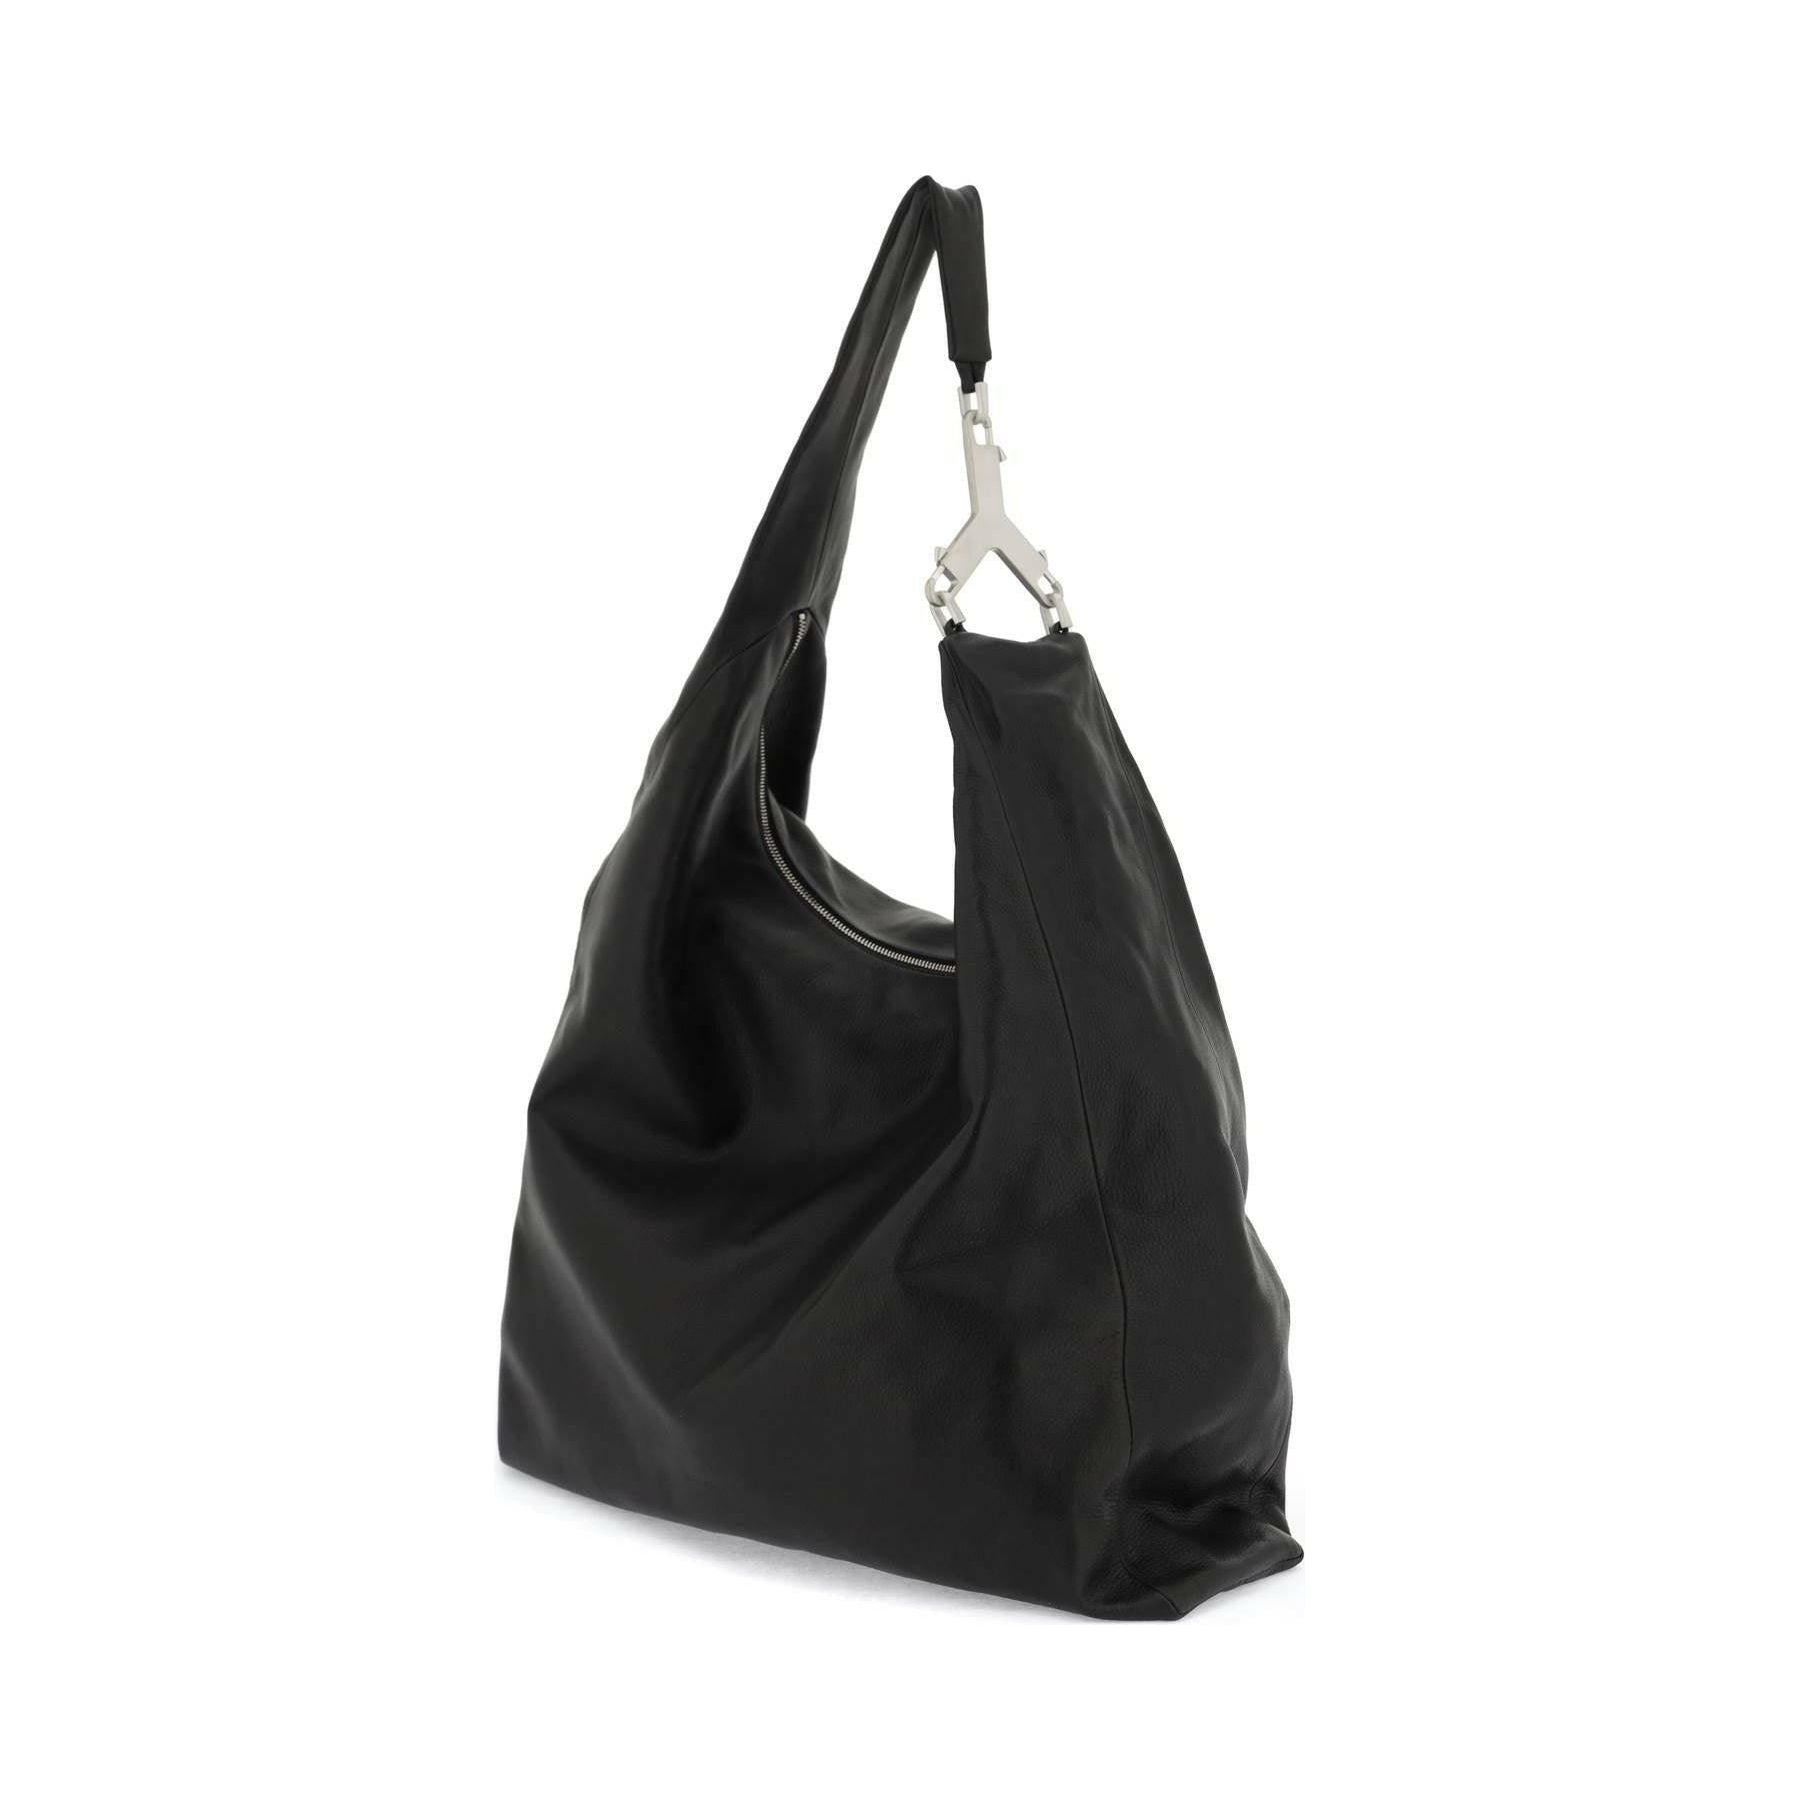 Cerberus Bag in Black Soft Grain Cow Leather RICK OWENS JOHN JULIA.